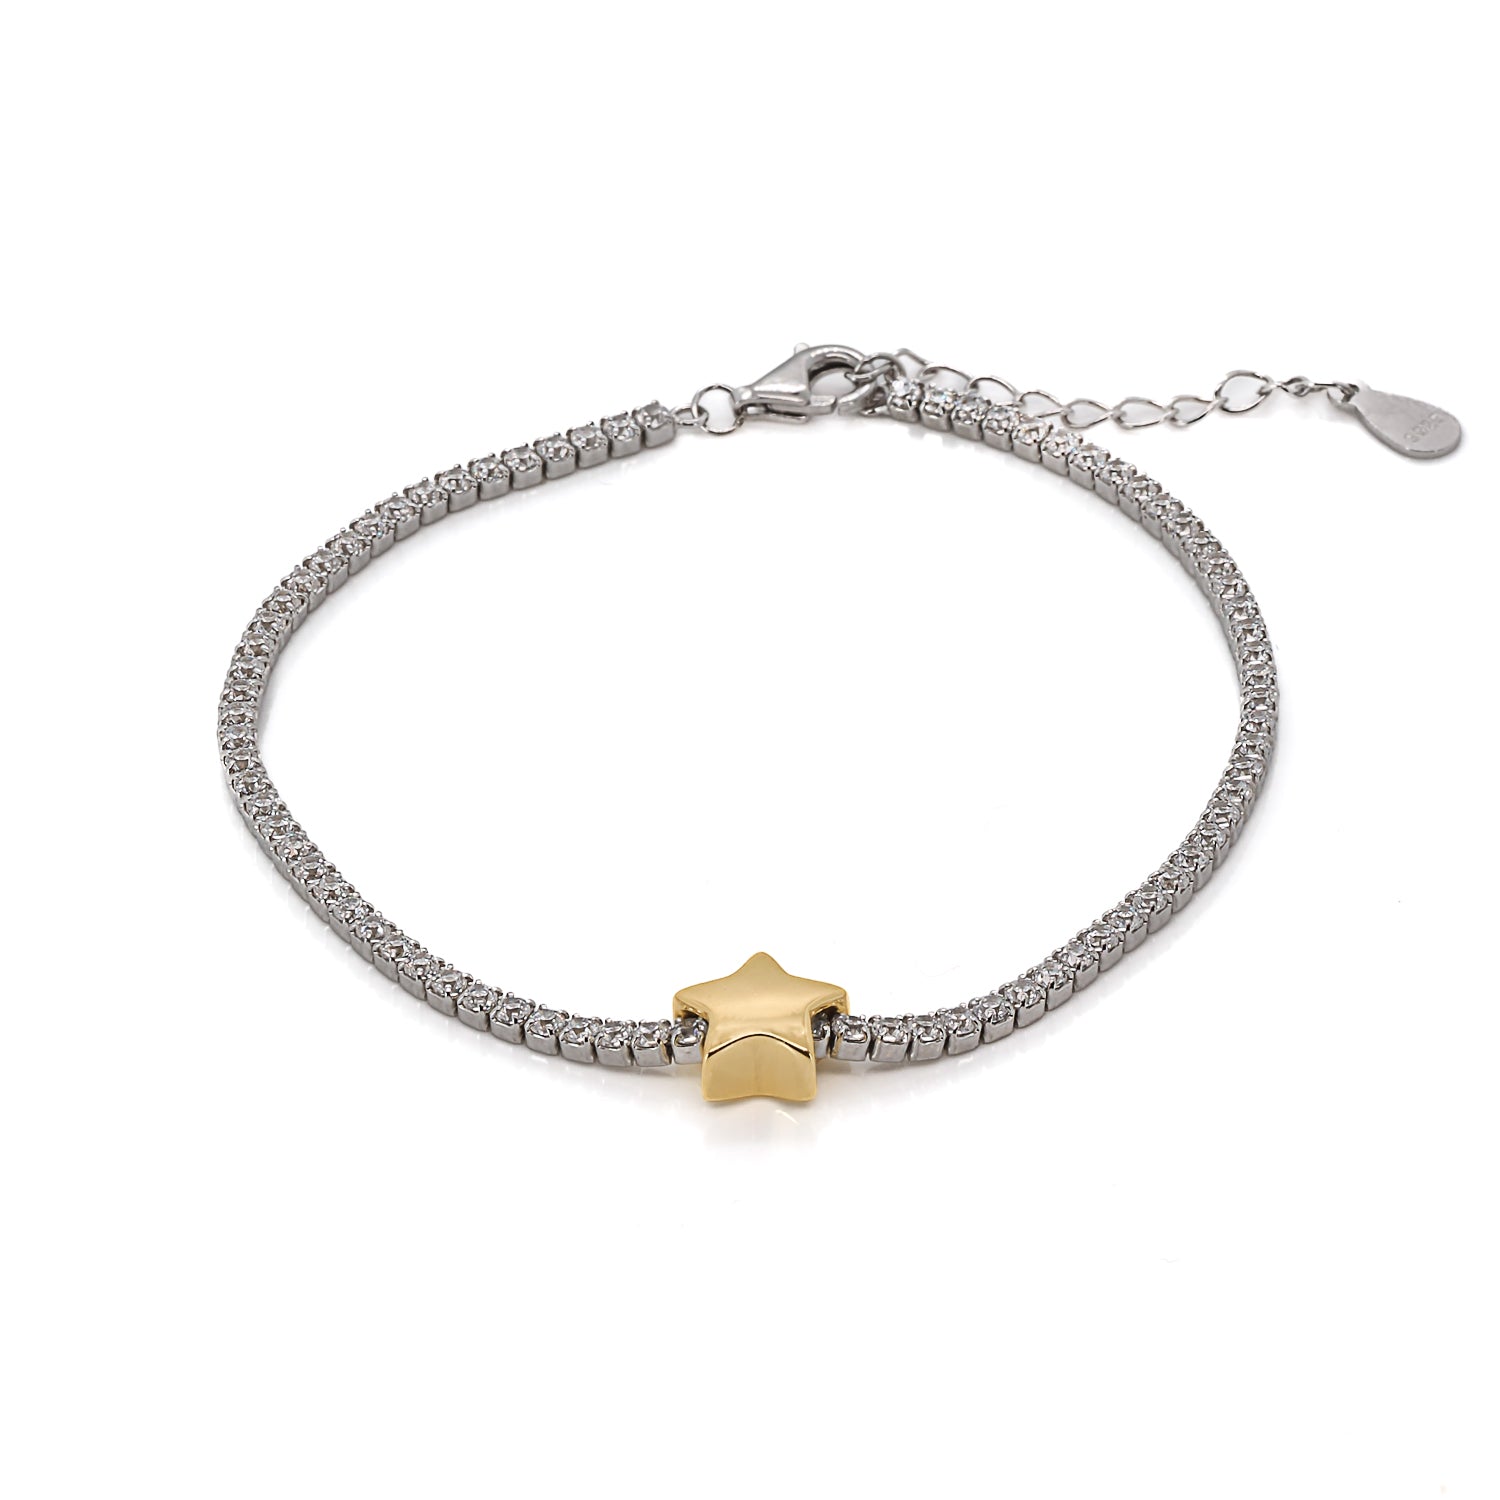 Gold Star Diamond Tennis Bracelet: Elegance and symbolism combined.